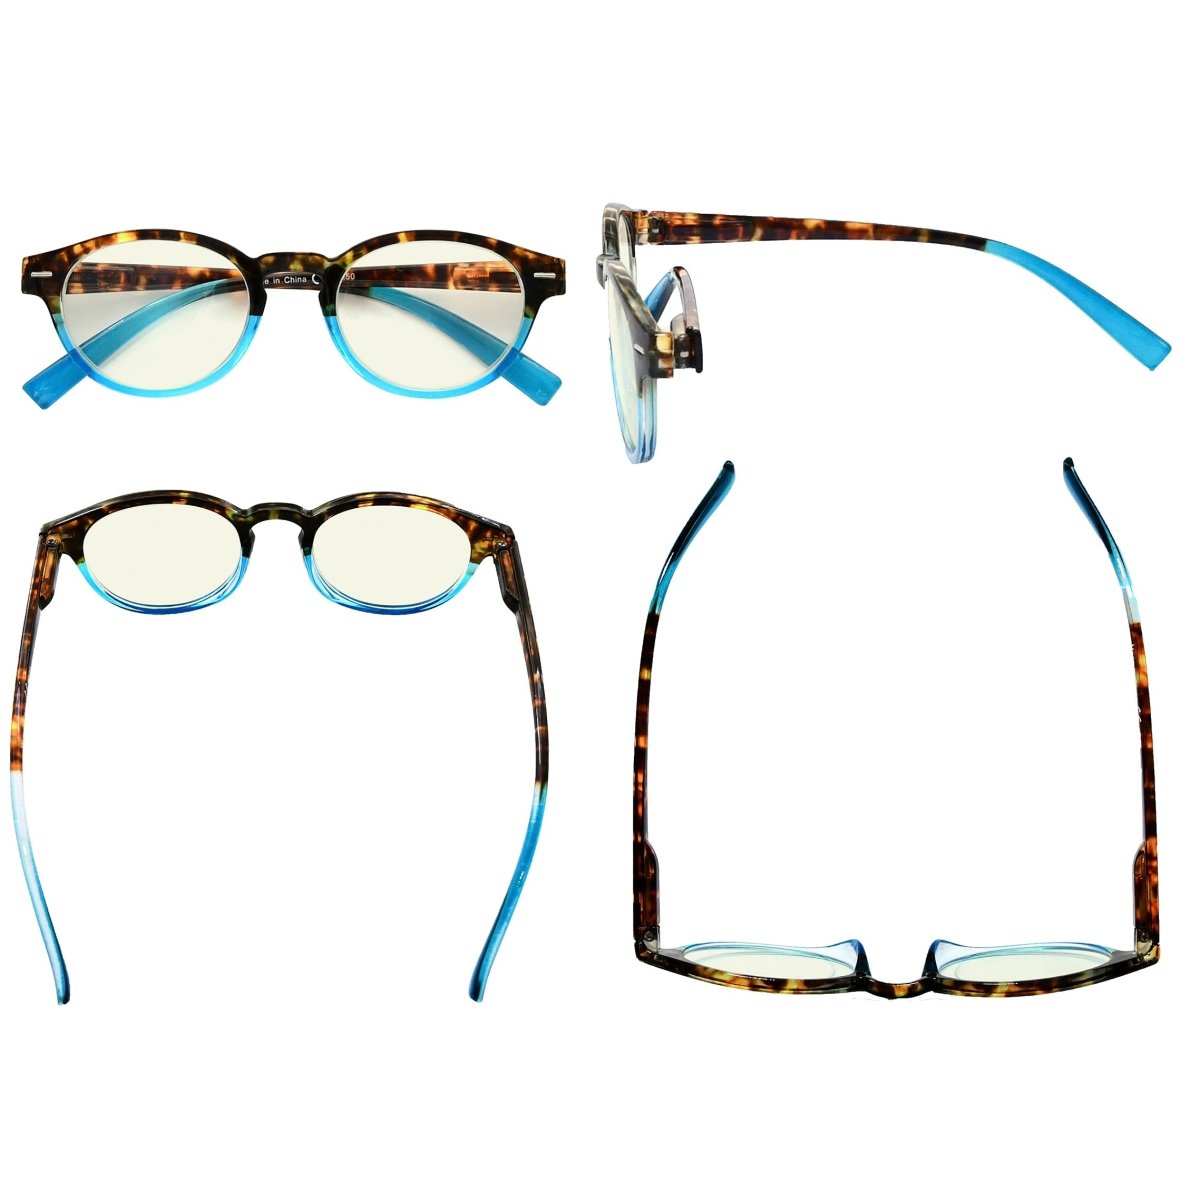 3 Pack Elegant Oval Blue Light Filter Reading Glasses UVR091Deyekeeper.com